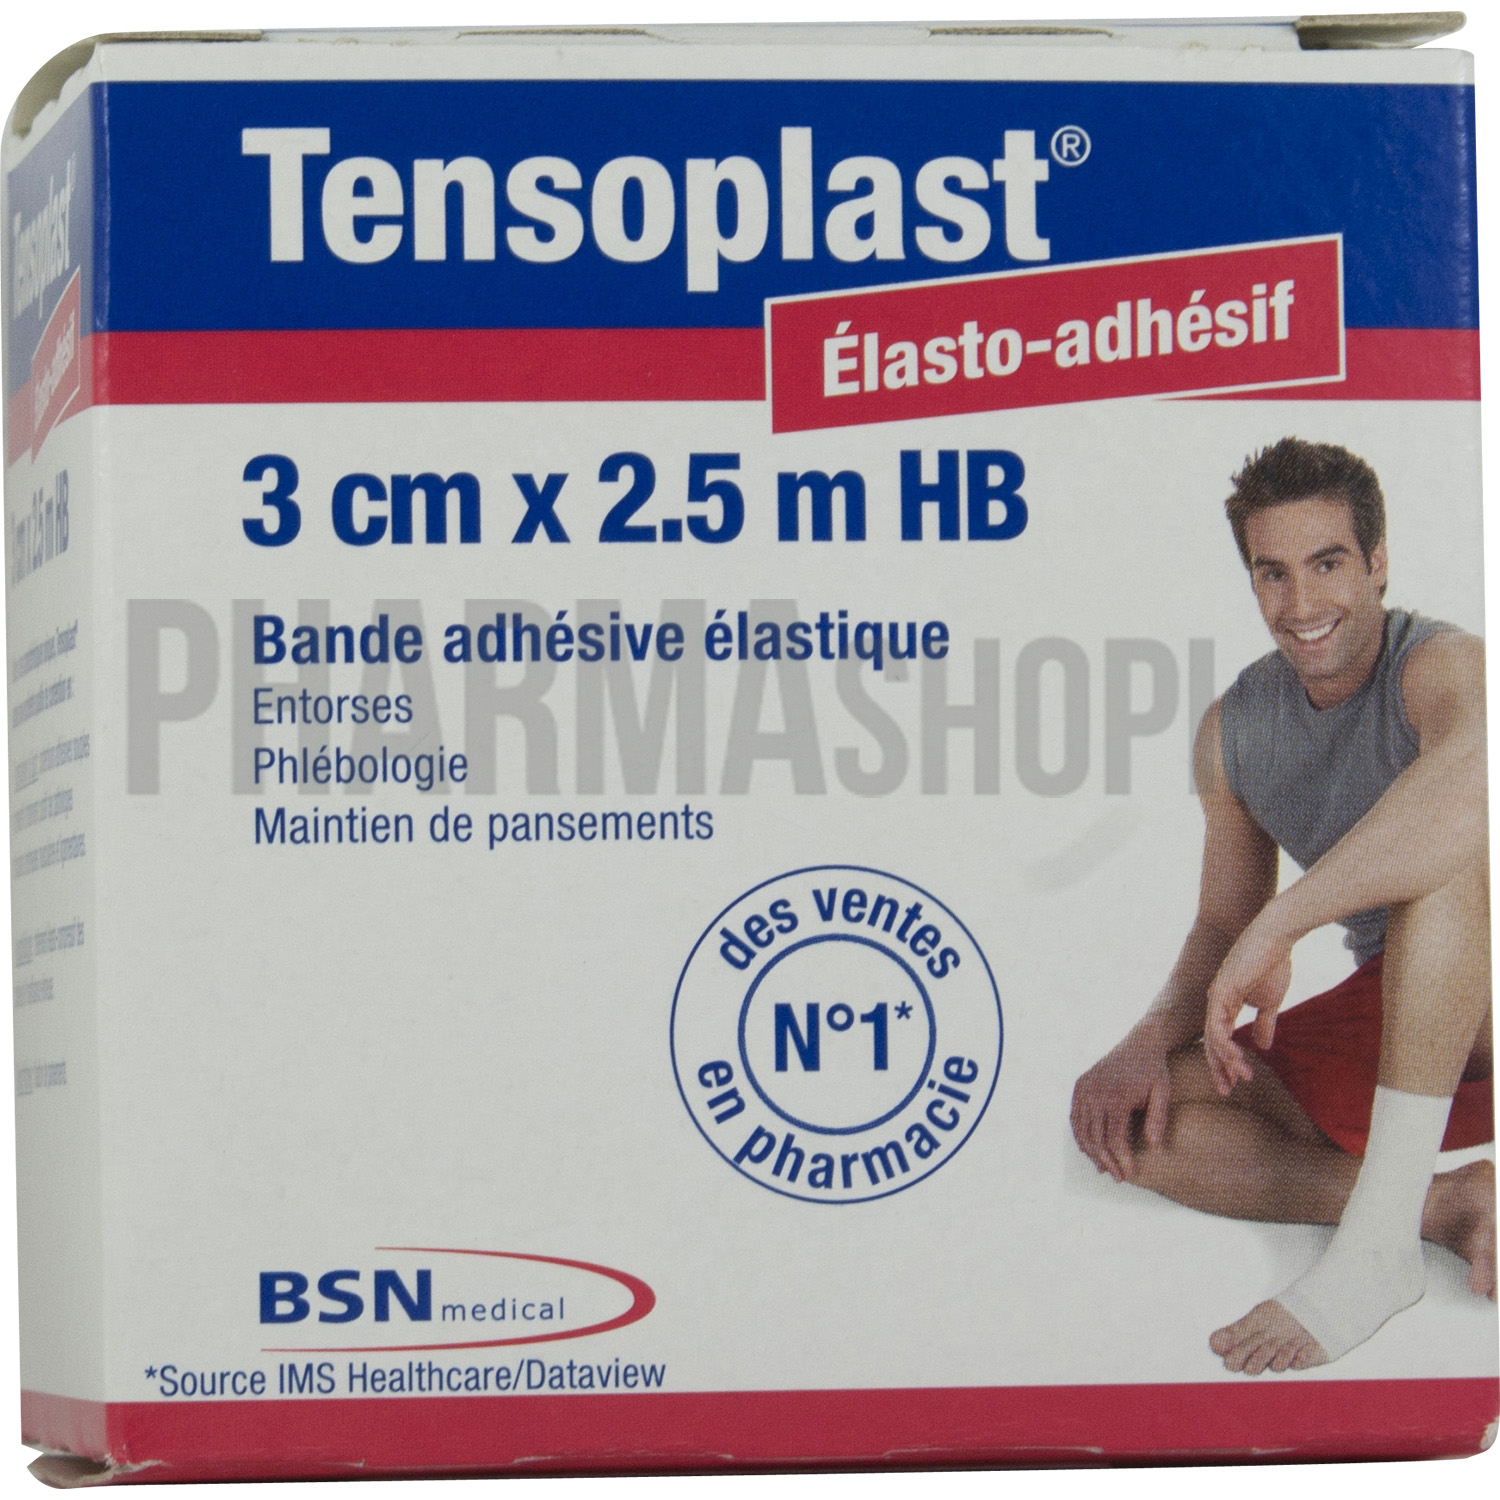 Tensoplast Elasto-adhésif bande adhésive élastique BSN médical - bande de 3 cm x 2,5 m